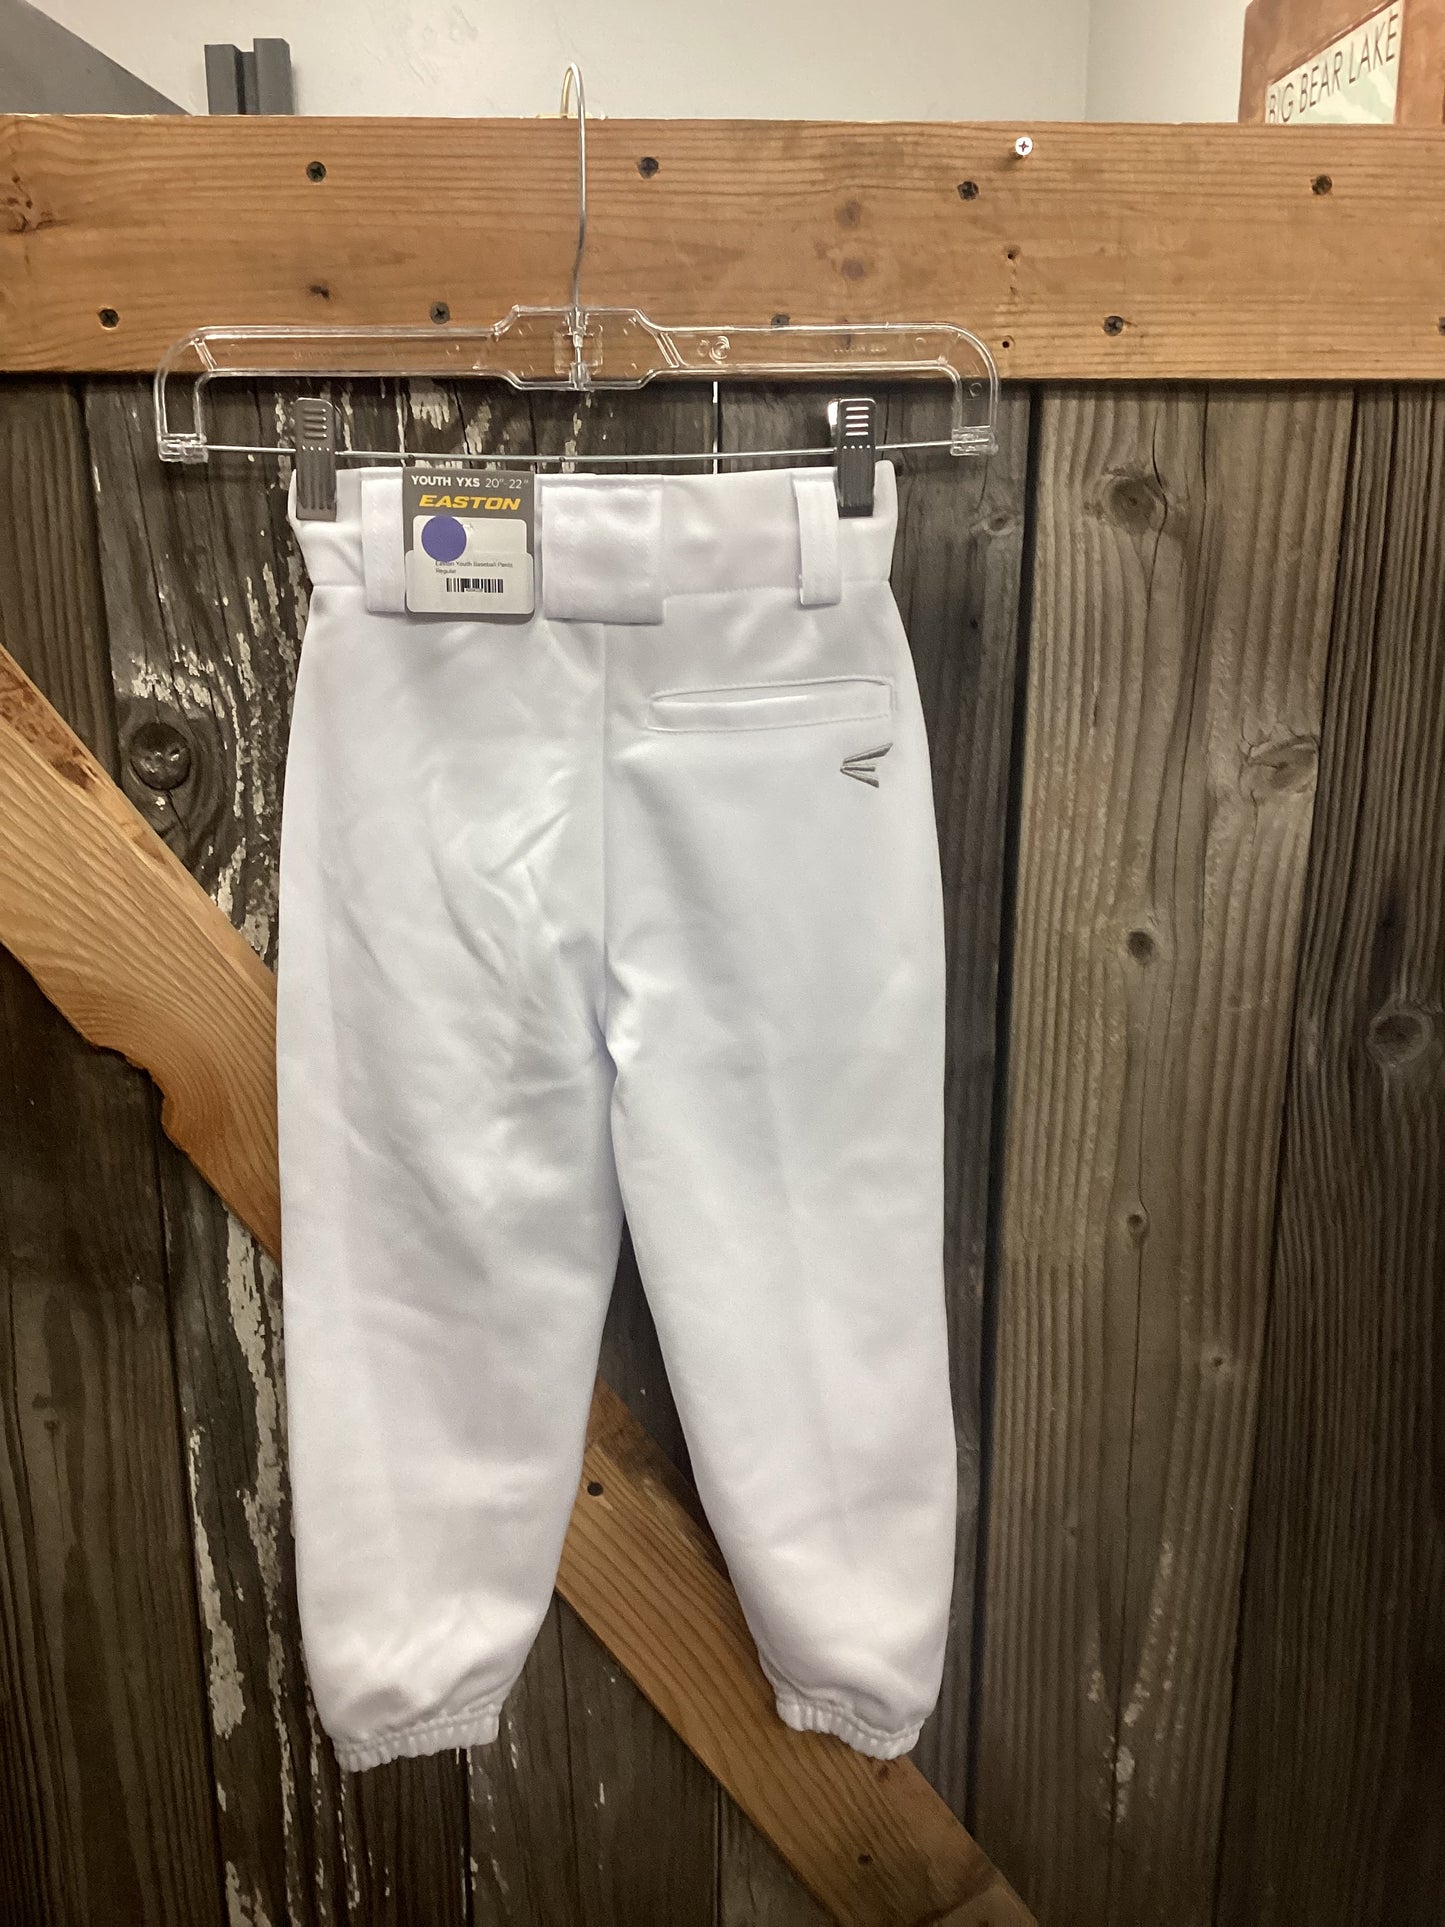 Easton Youth Baseball Pants size 20"-22" White